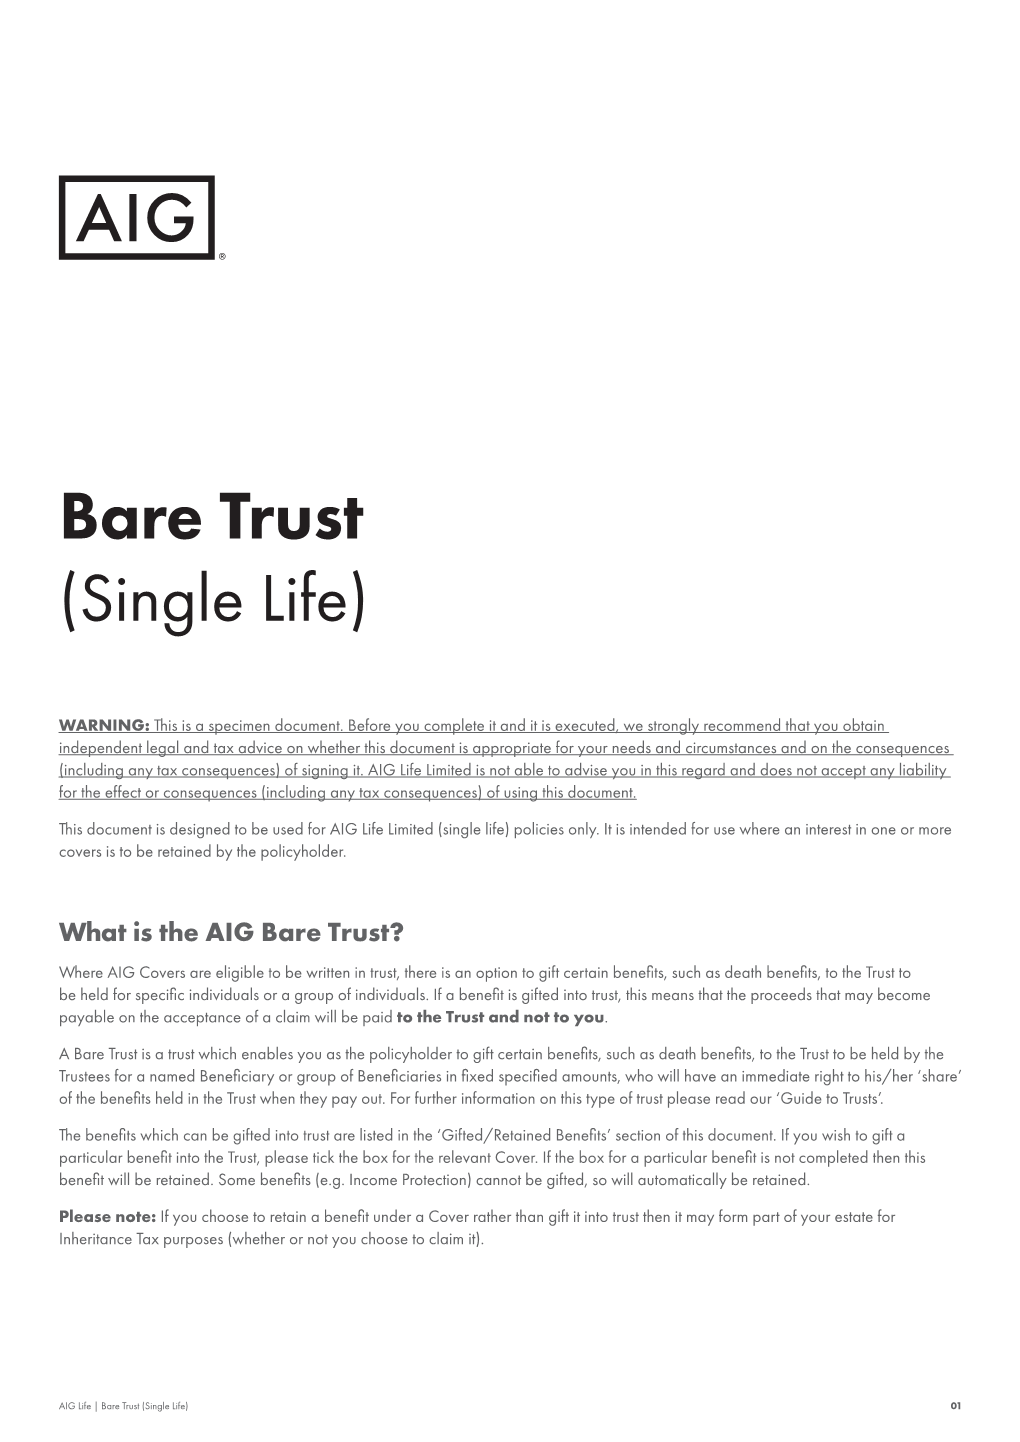 Bare Trust (Single Life)